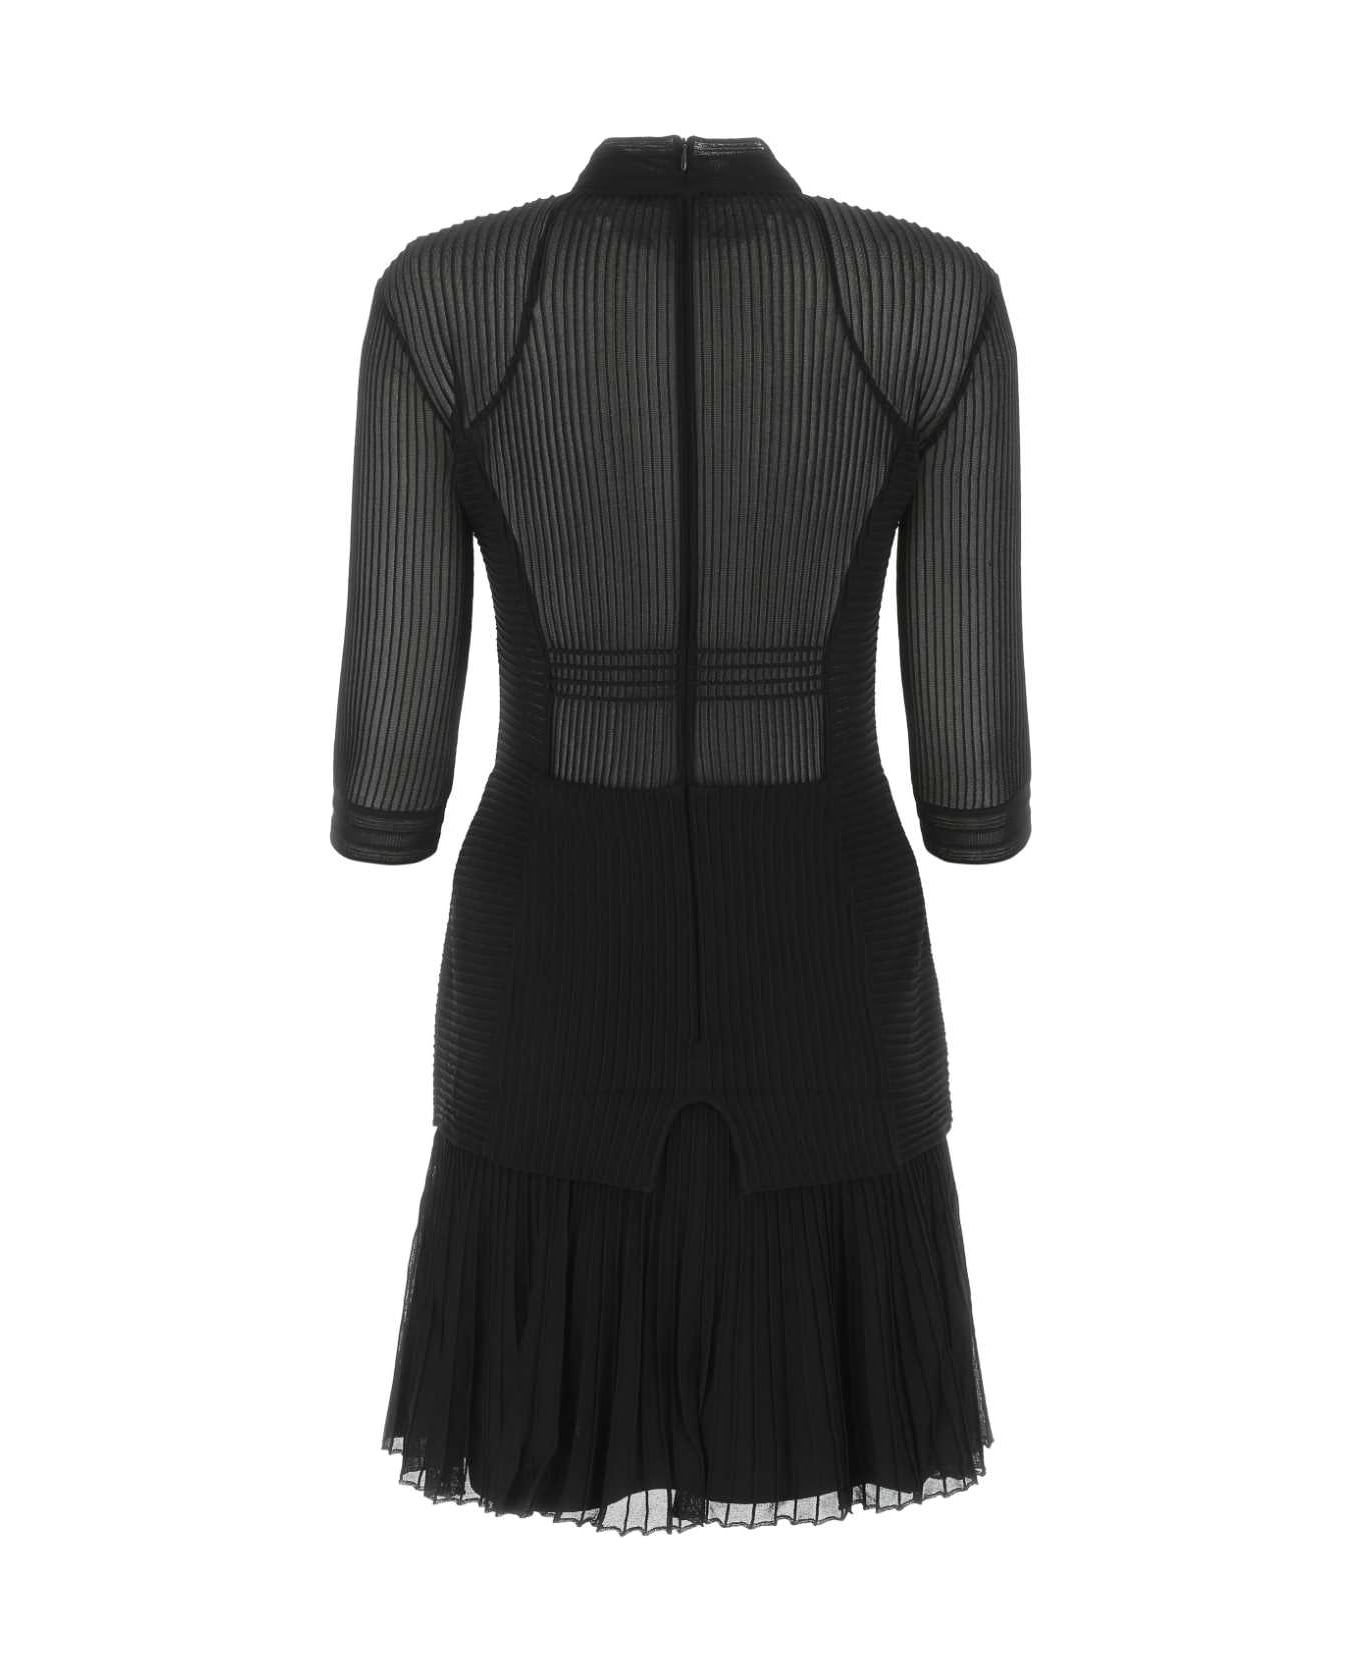 Givenchy Black Stretch Viscose Blend Mini Dress - 001